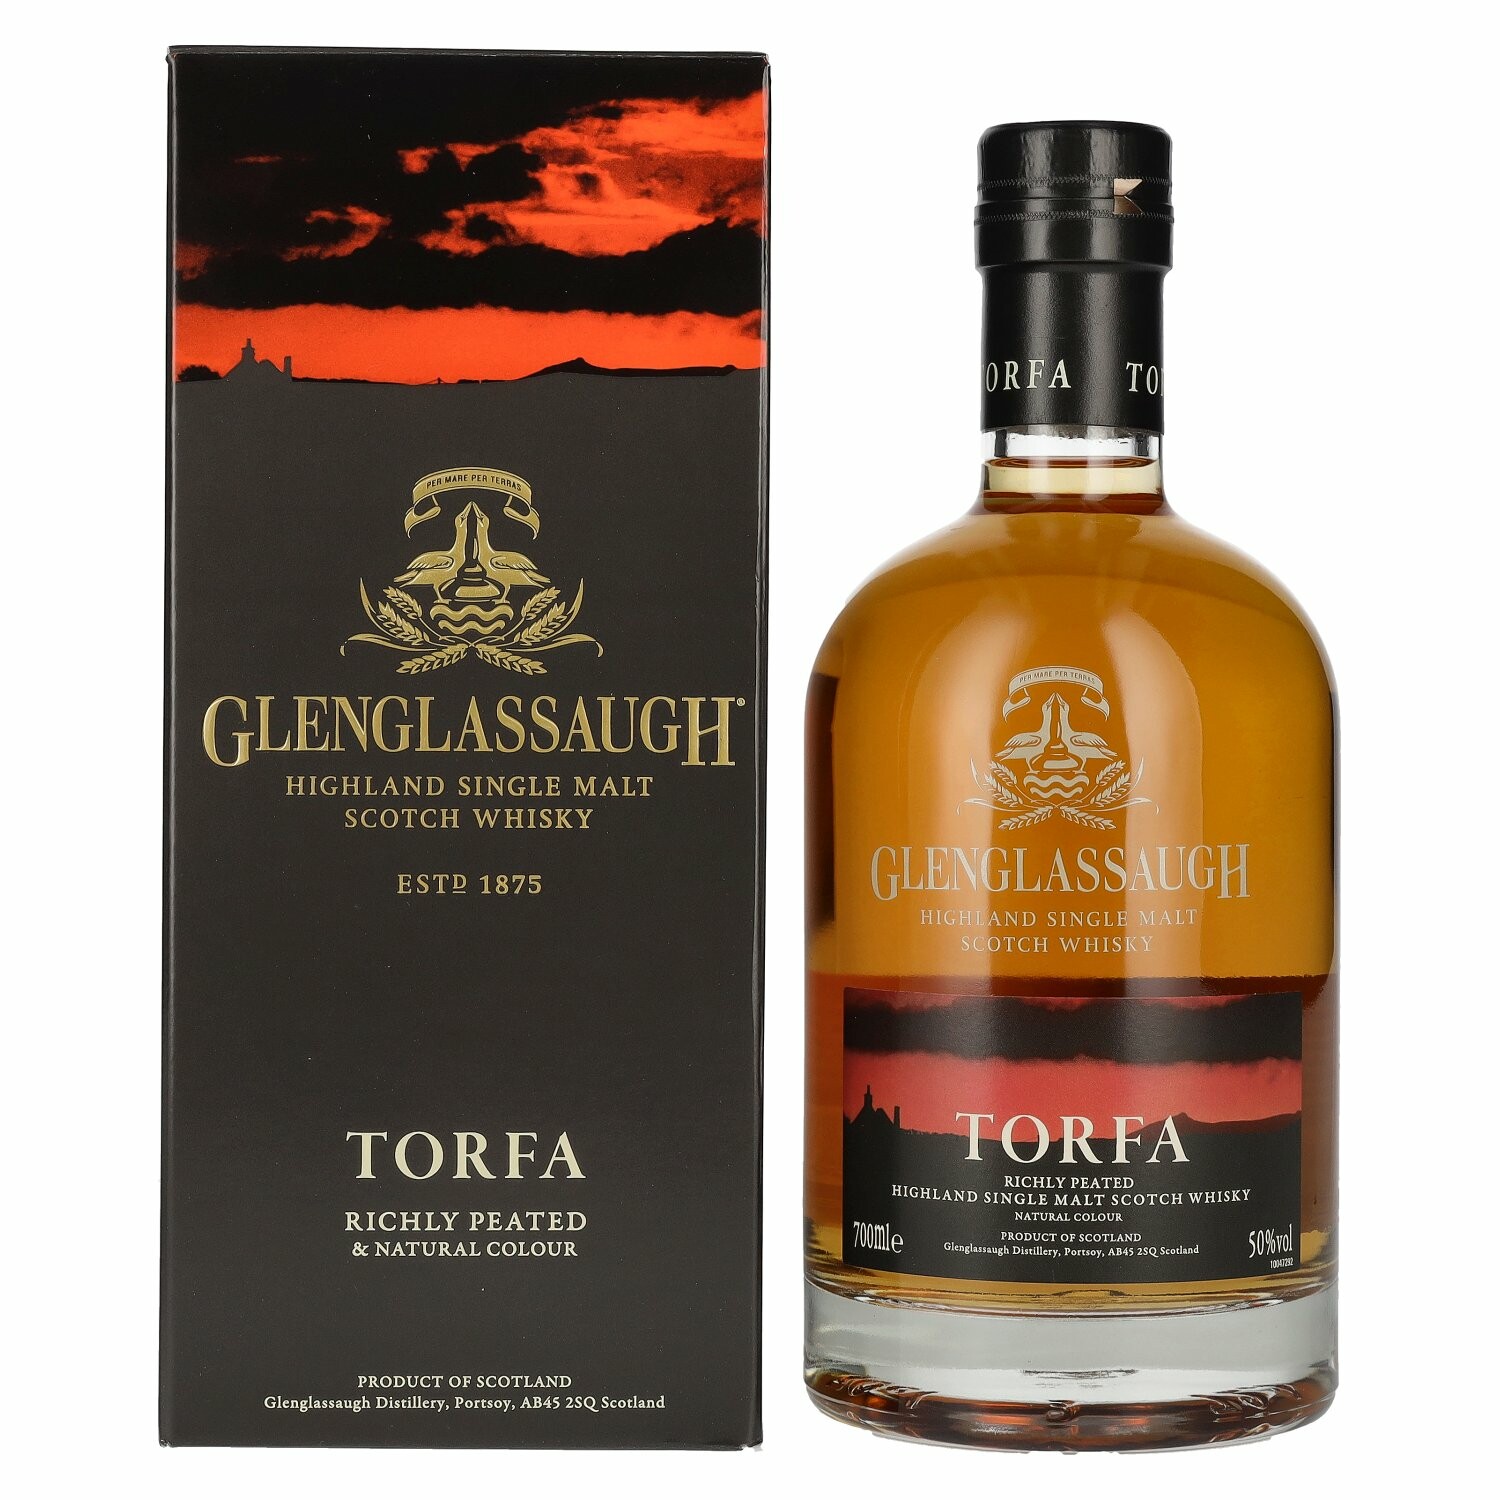 Glenglassaugh TORFA Highland Single Malt Scotch Whisky 50% Vol. 0,7l in Giftbox